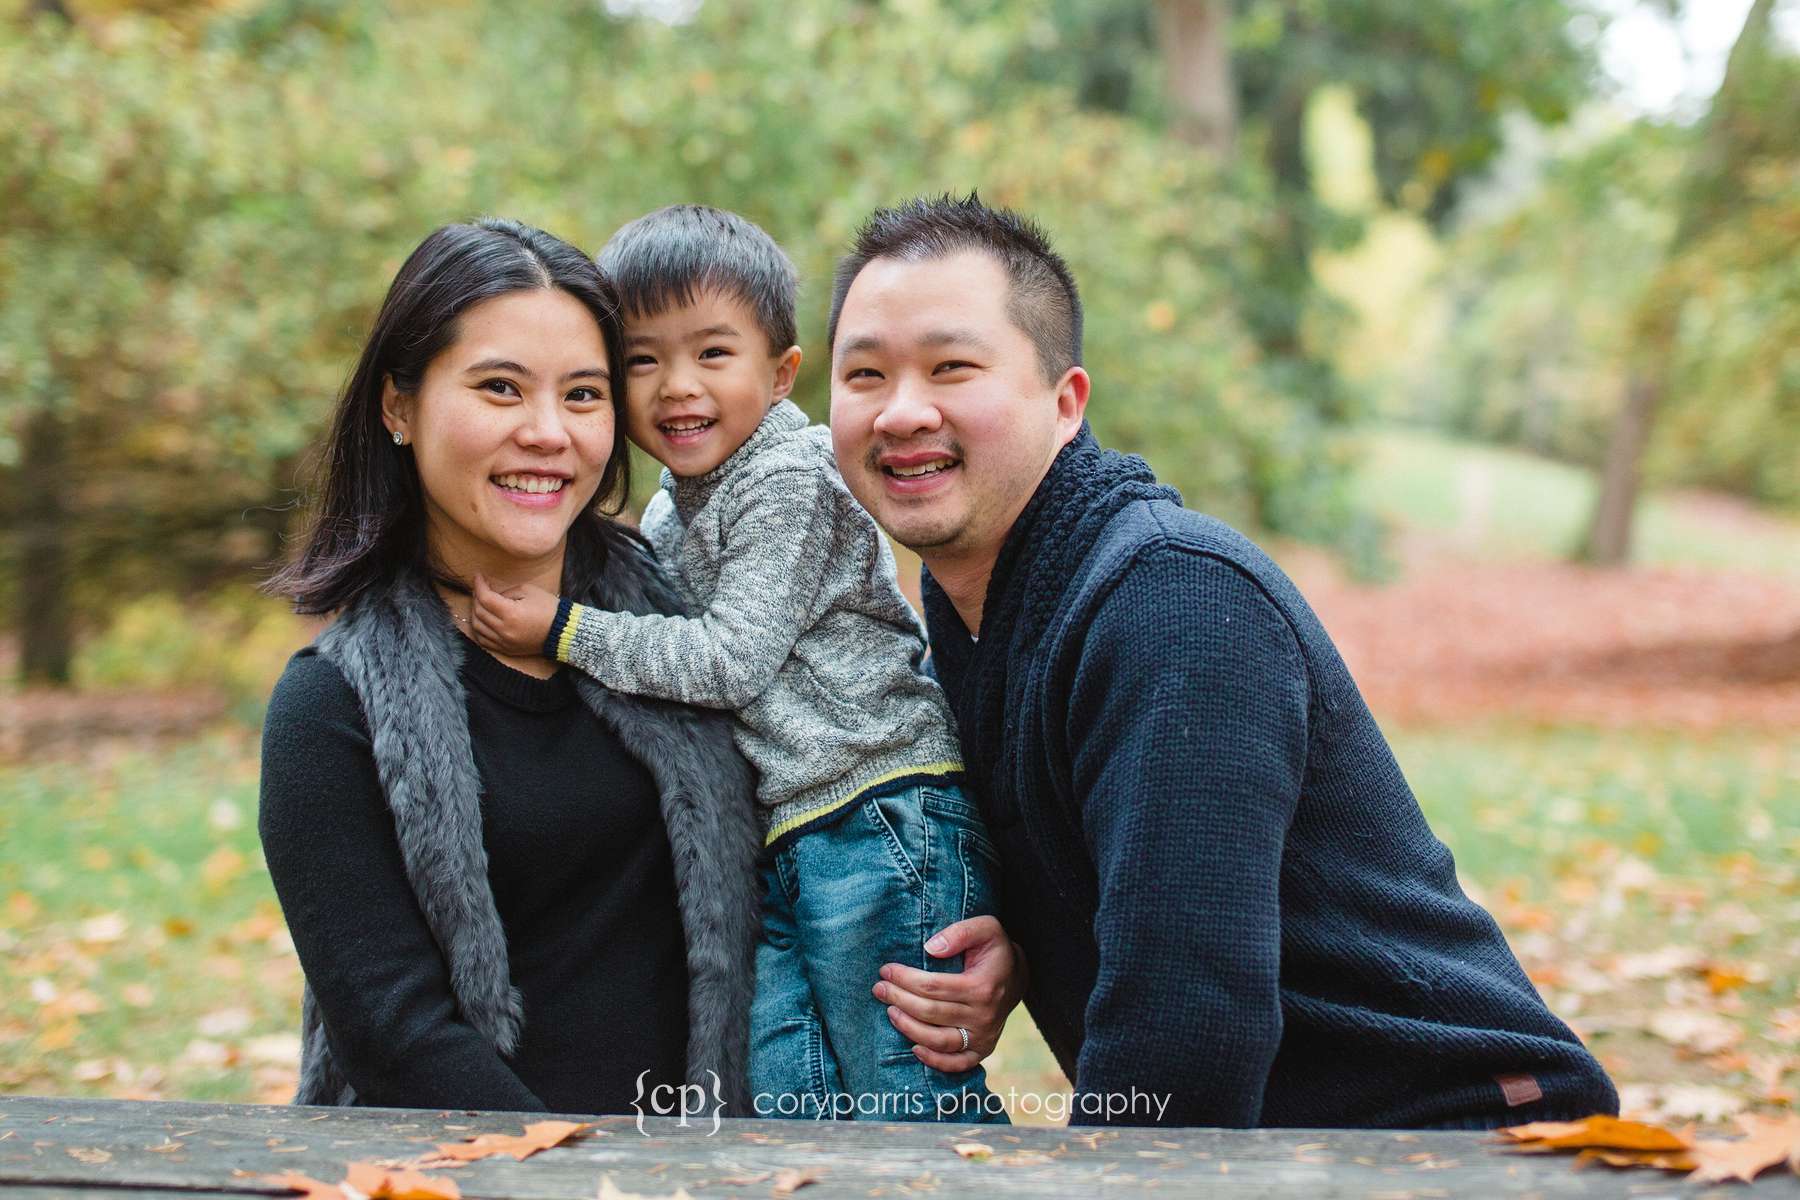 Family portraits at Washington Park Arboretum